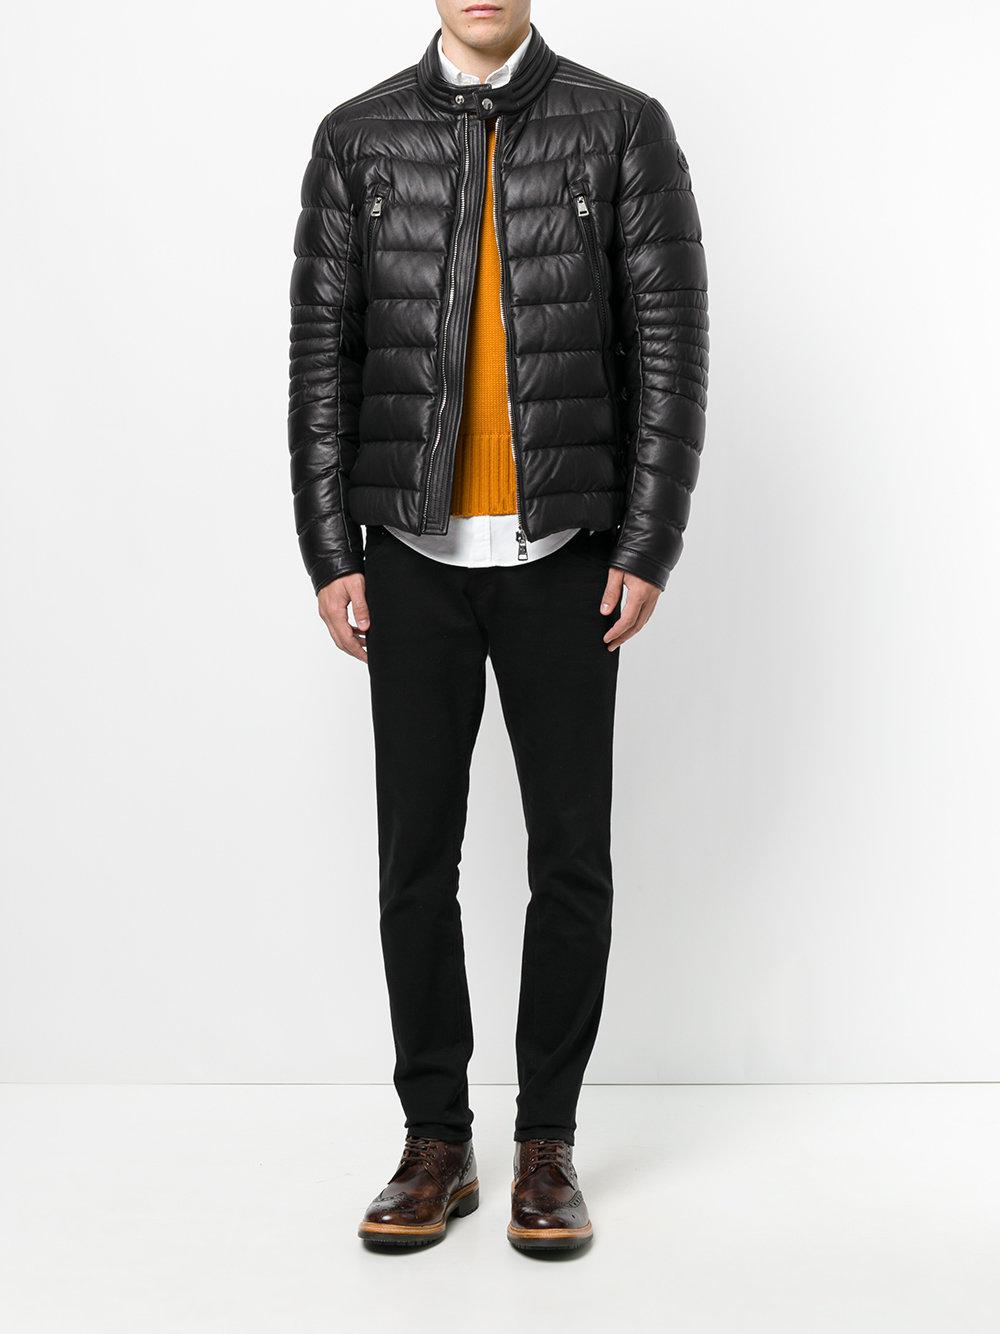 Moncler Leather Amiot Jacket in Black for Men - Lyst